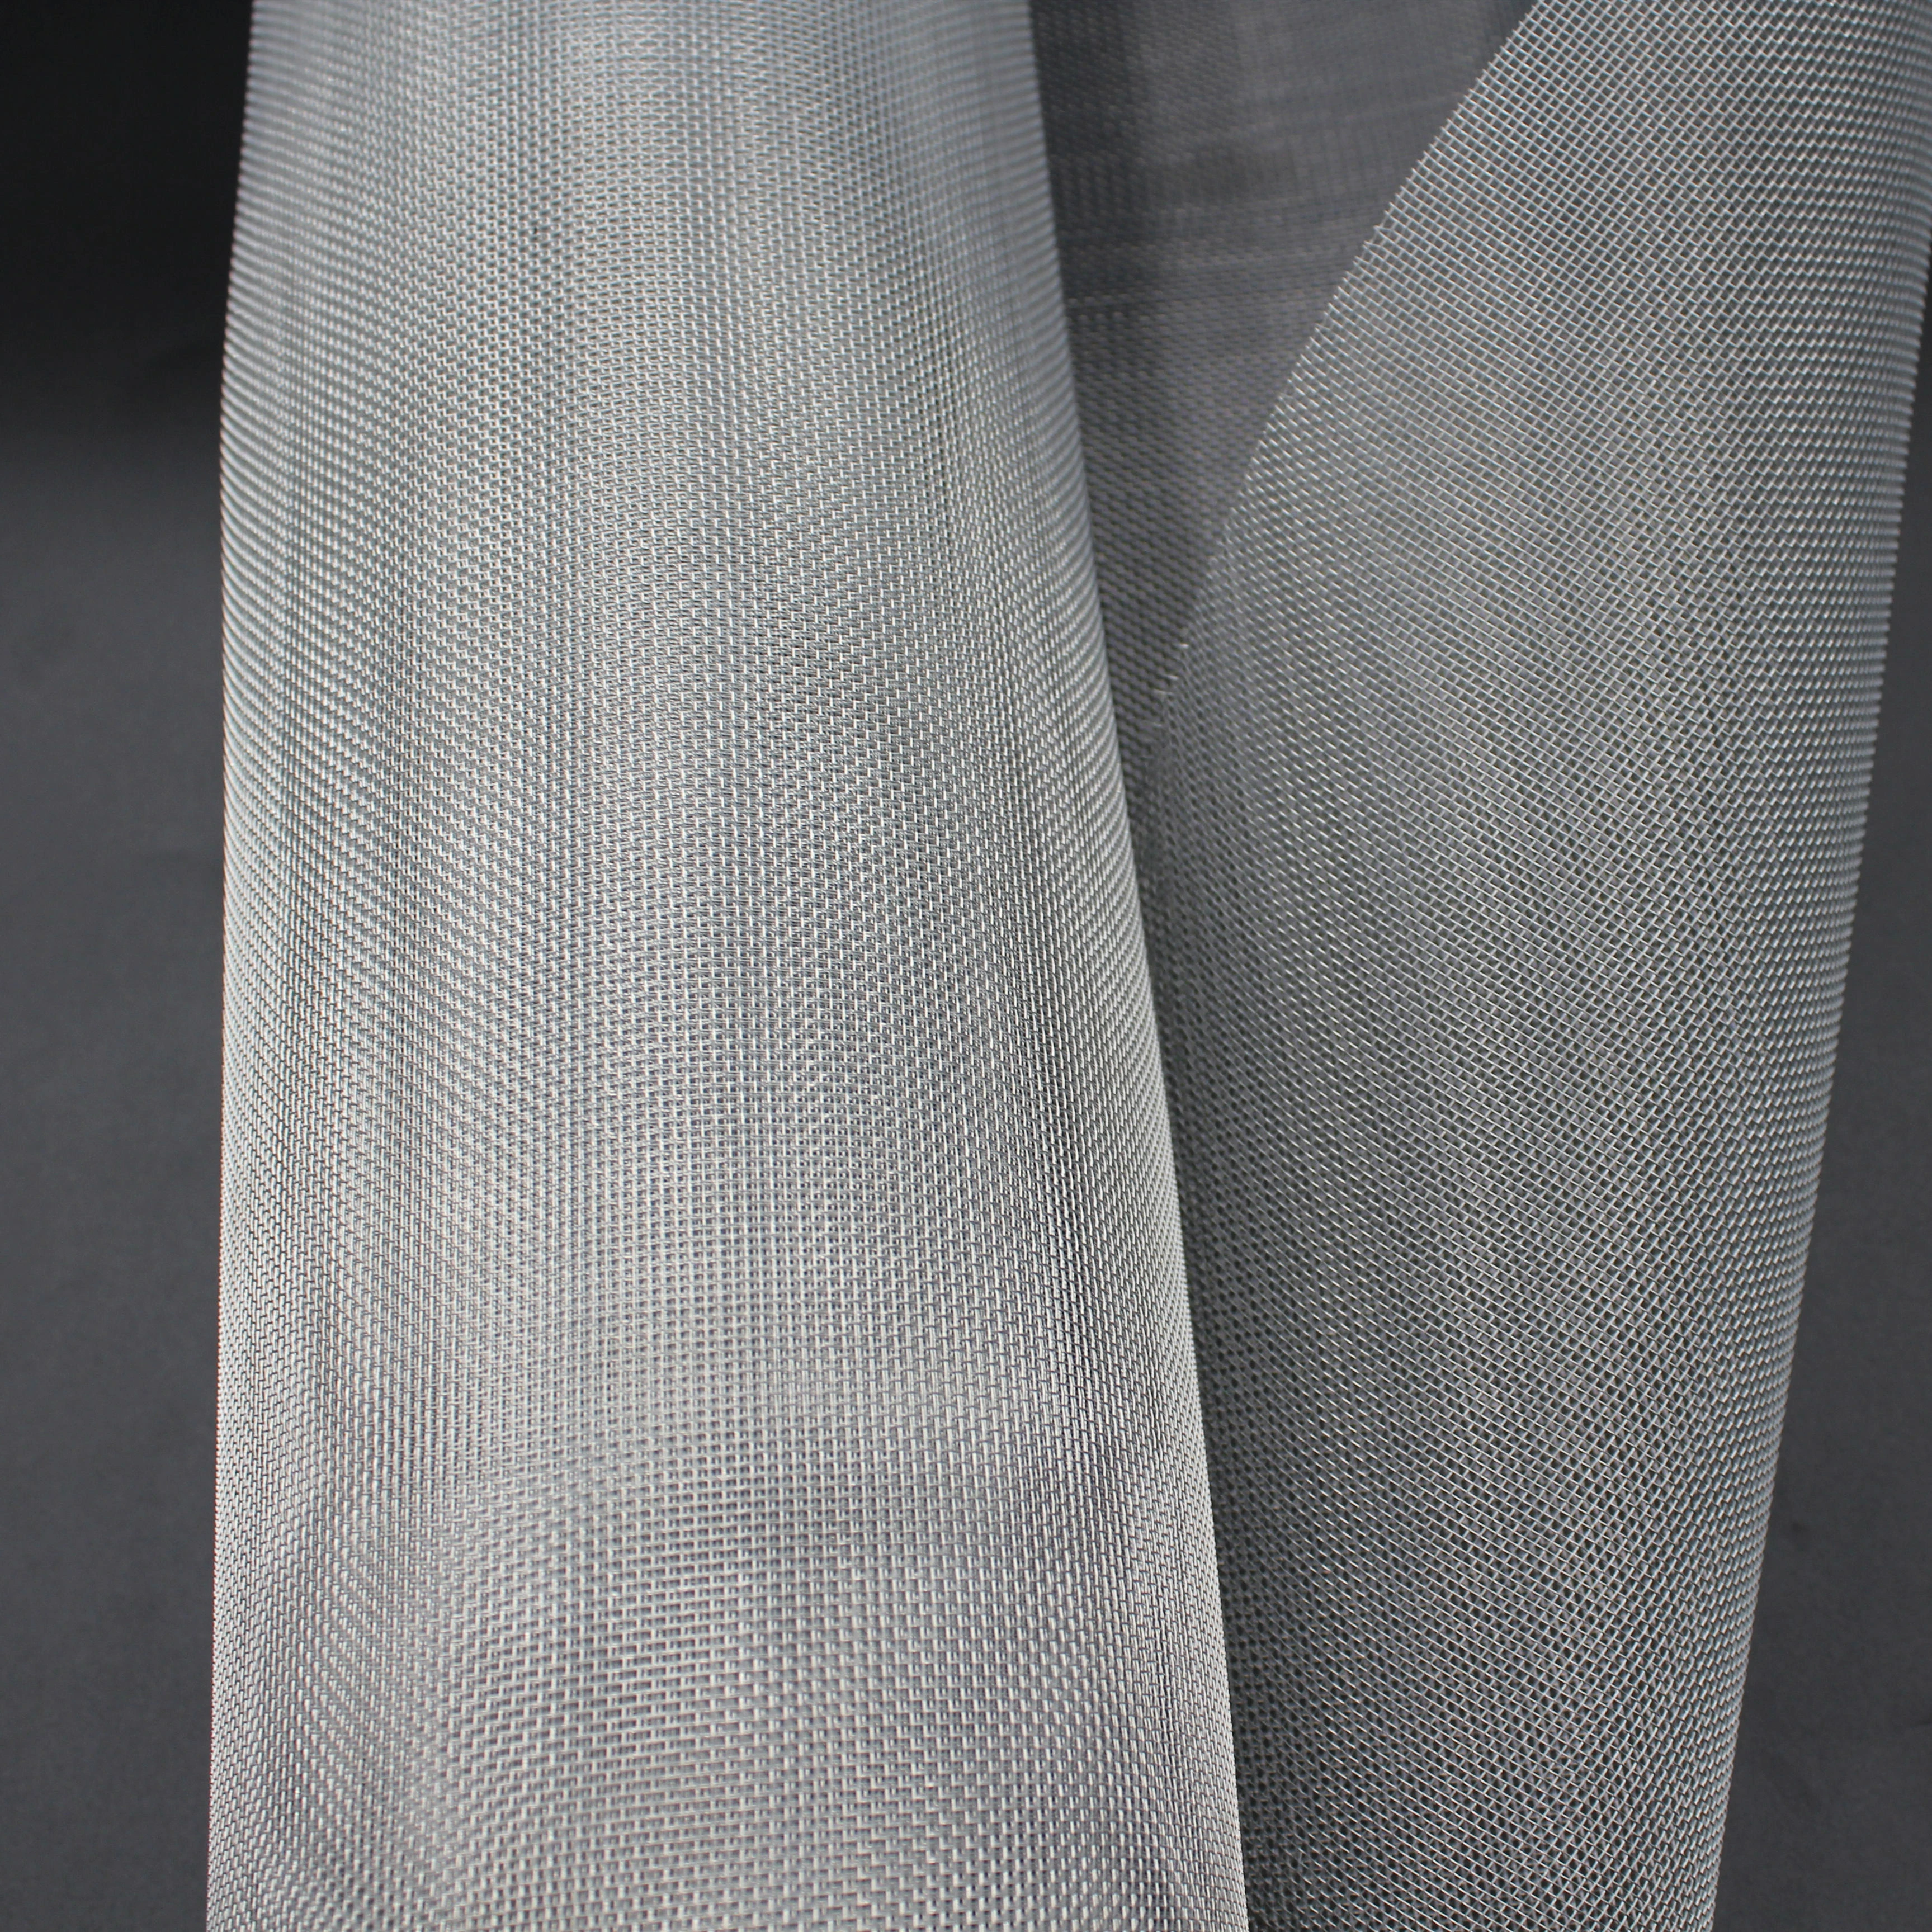 Medium separation 10*10 100 120 200 mesh 99.9% pure nickel N6 wire filter mesh cloth